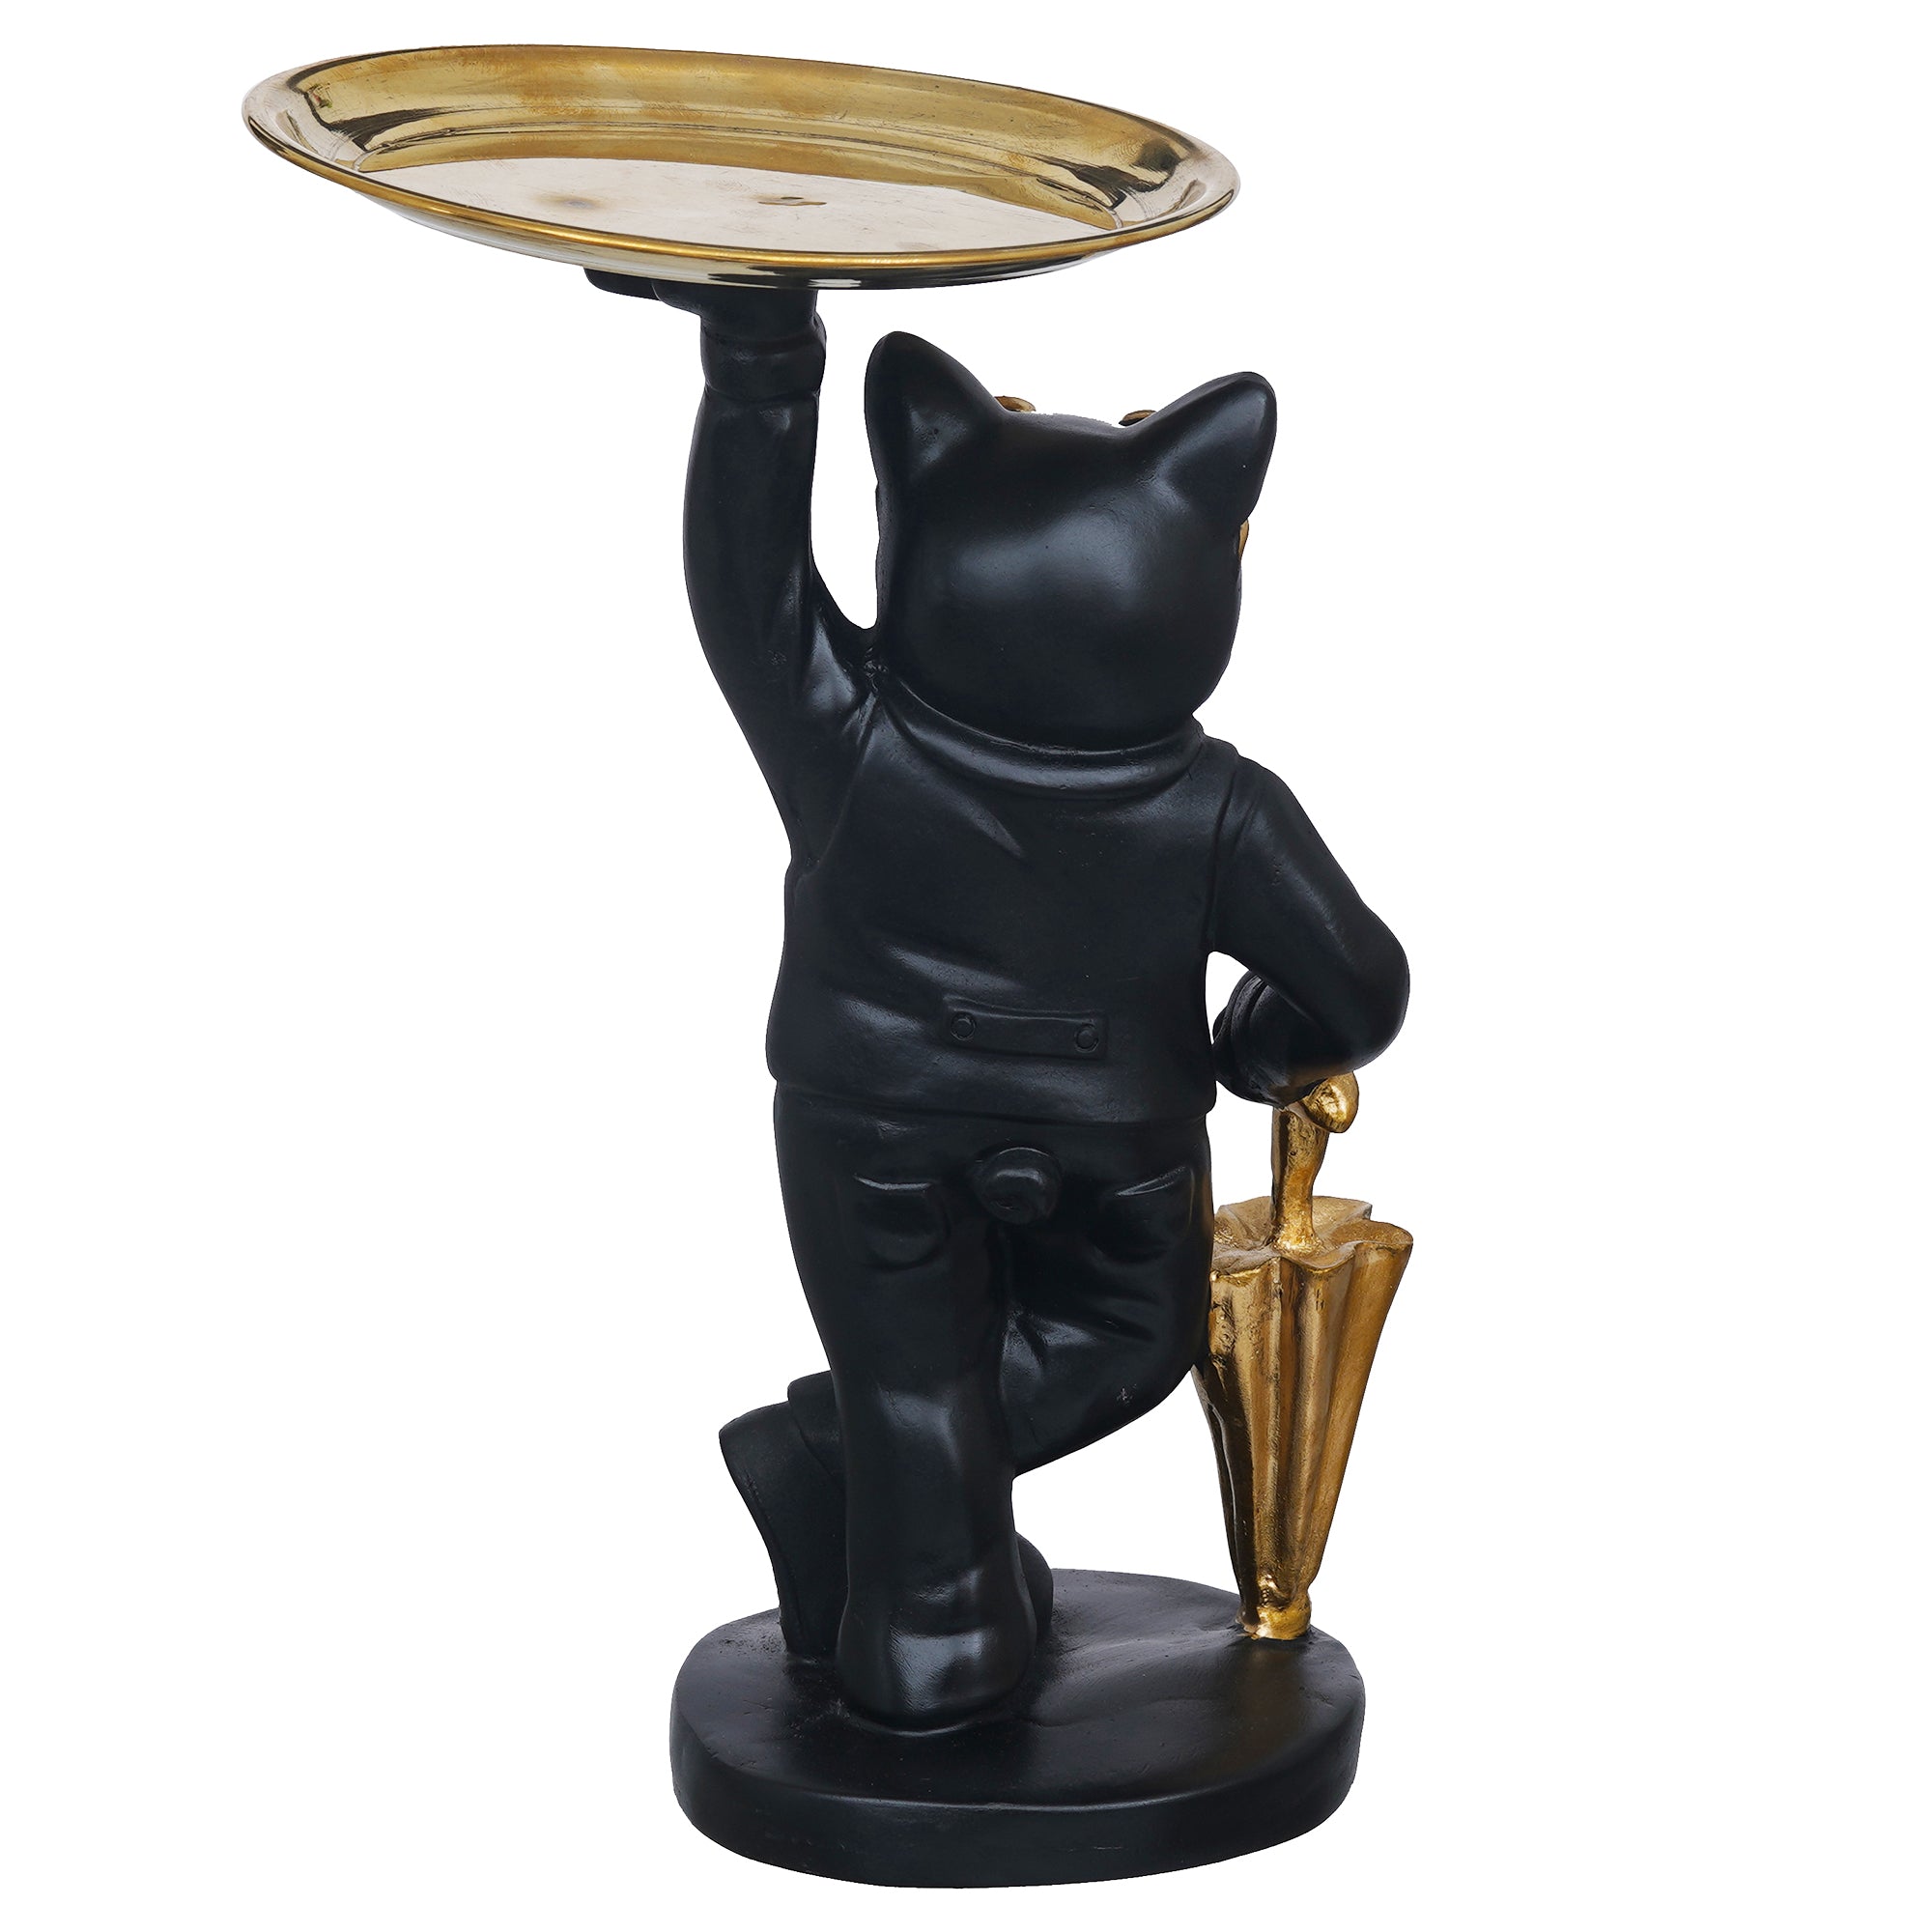 eCraftIndia Golden Black Cat Statue in Formal Dress and Sunglasses with Umbrella Animal Showpiece 8